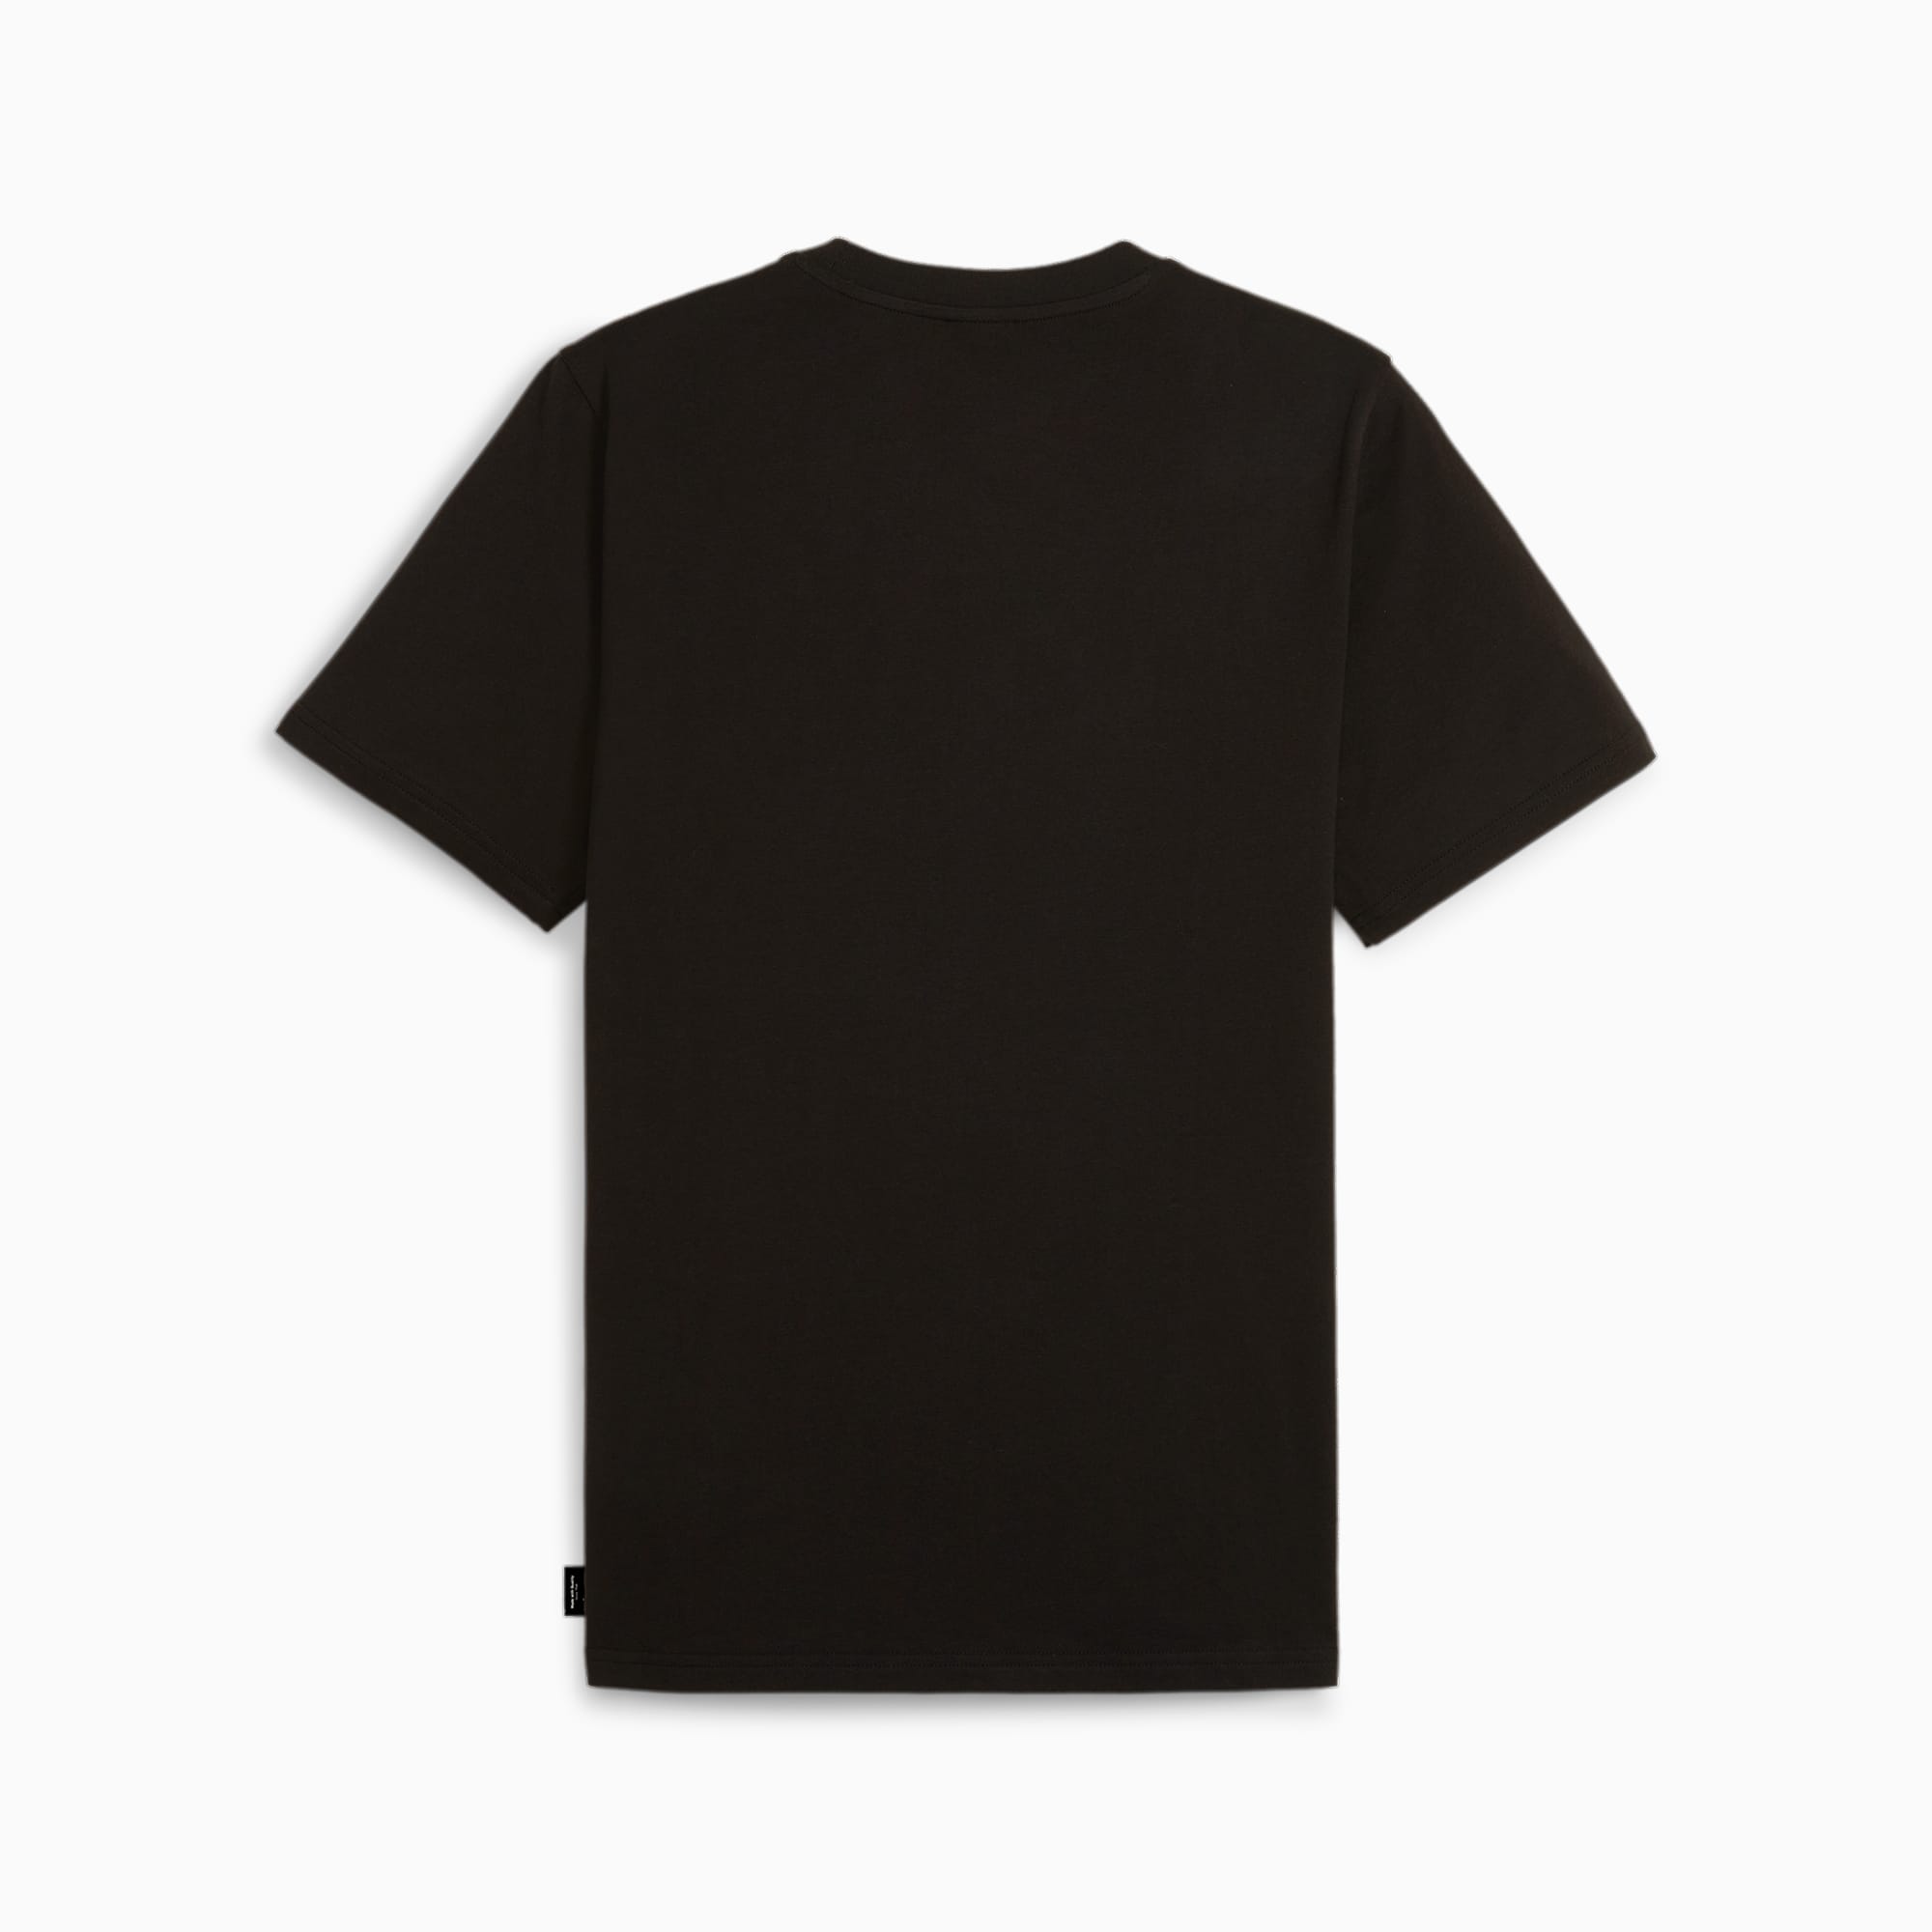 Graphics PUMA Spritz Men's T-Shirt, Black